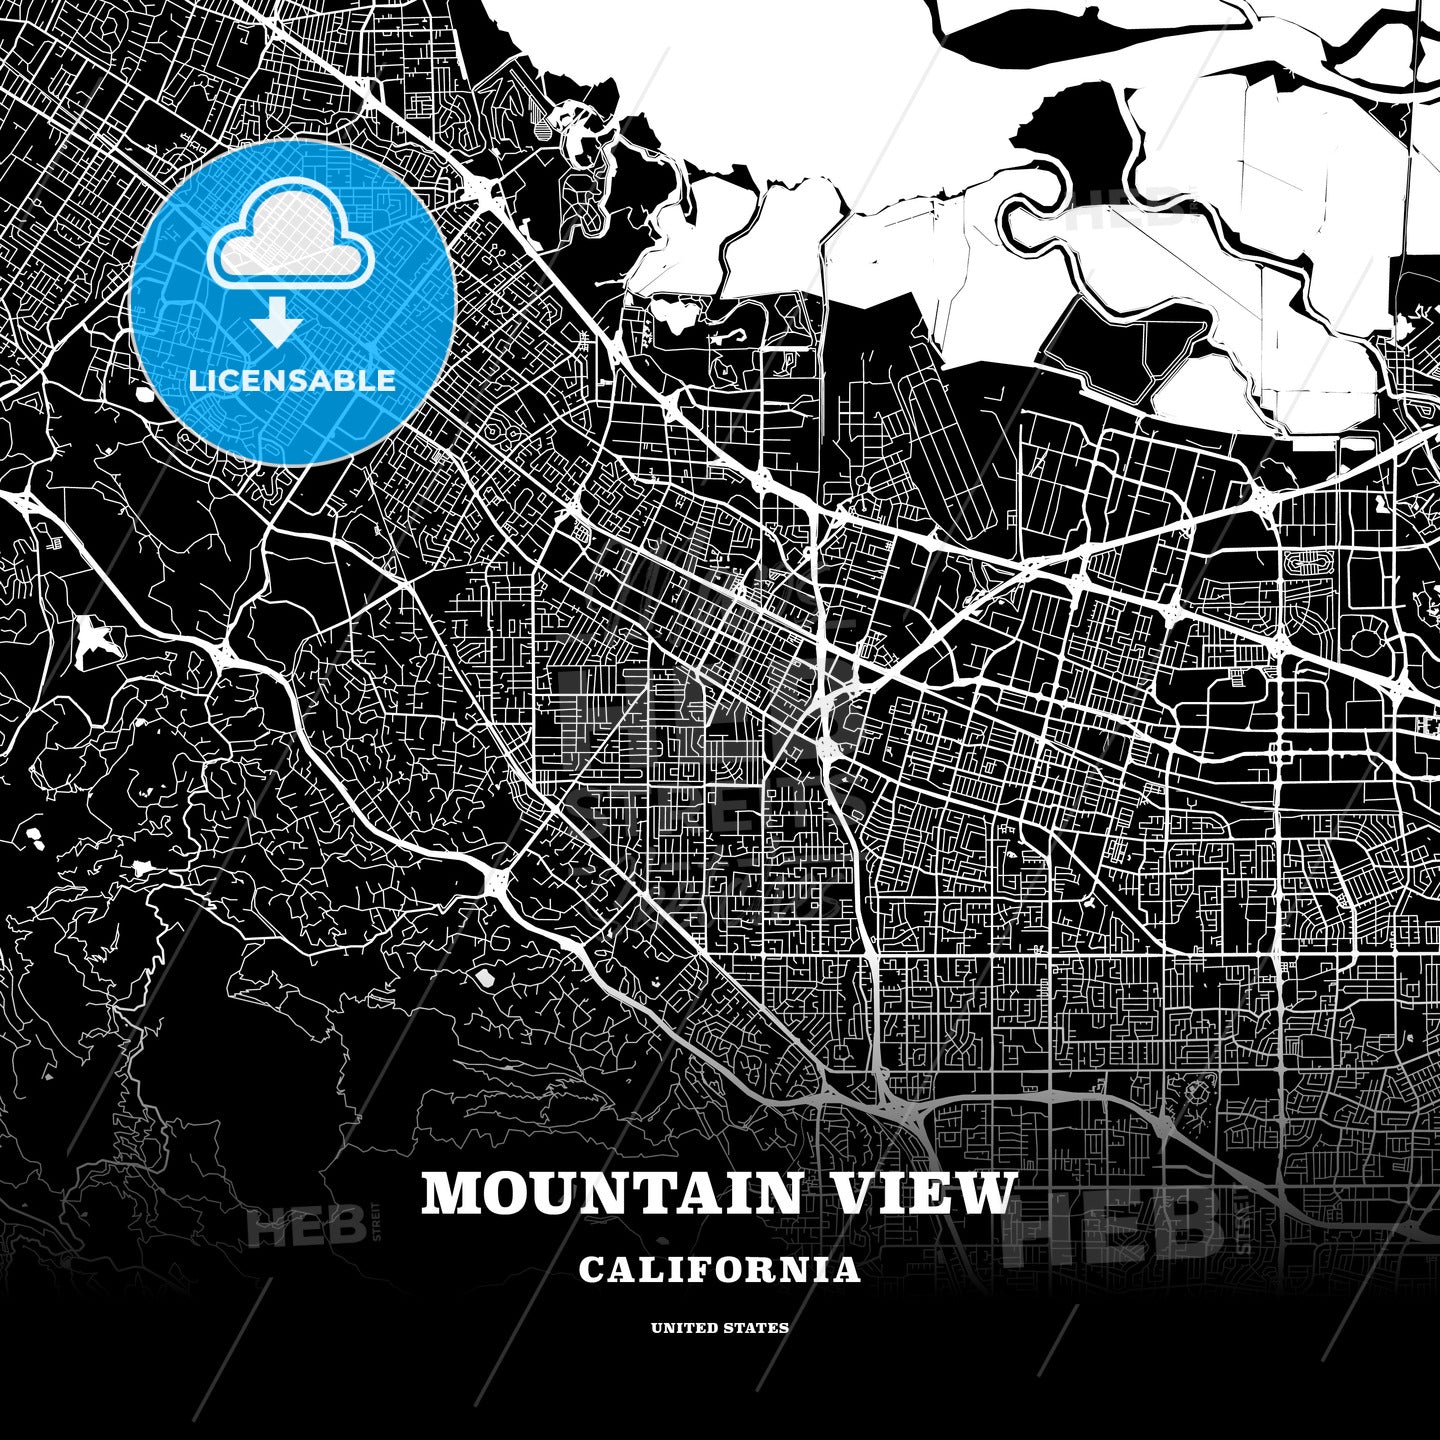 Mountain View, California, USA map